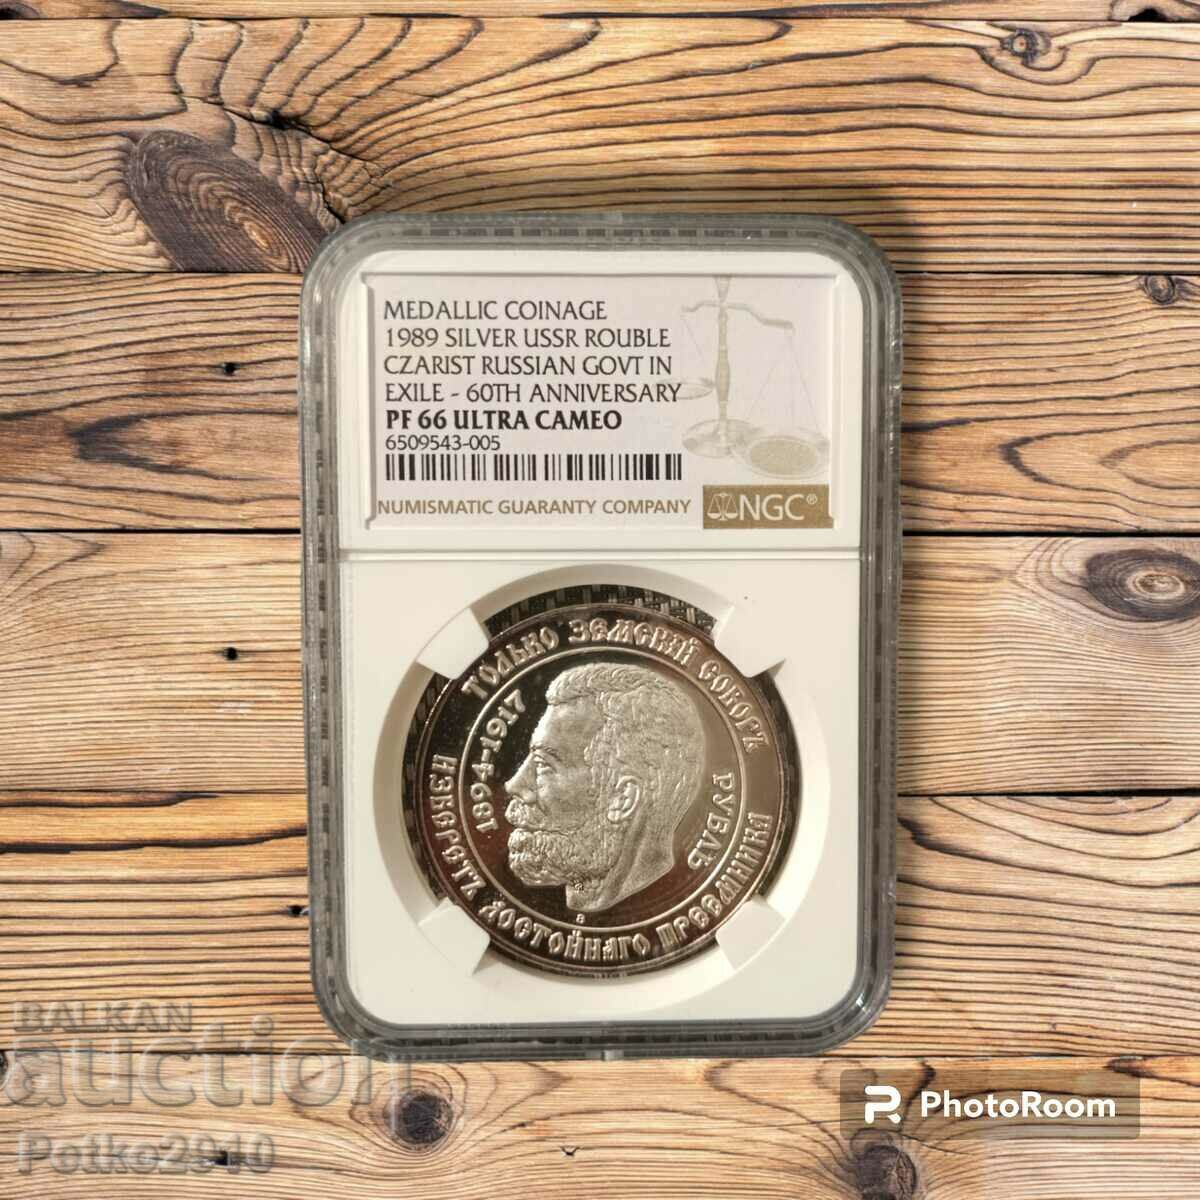 1/1000 World NGC 66 ULTRACAMEO Russian Ruble Silver Coin